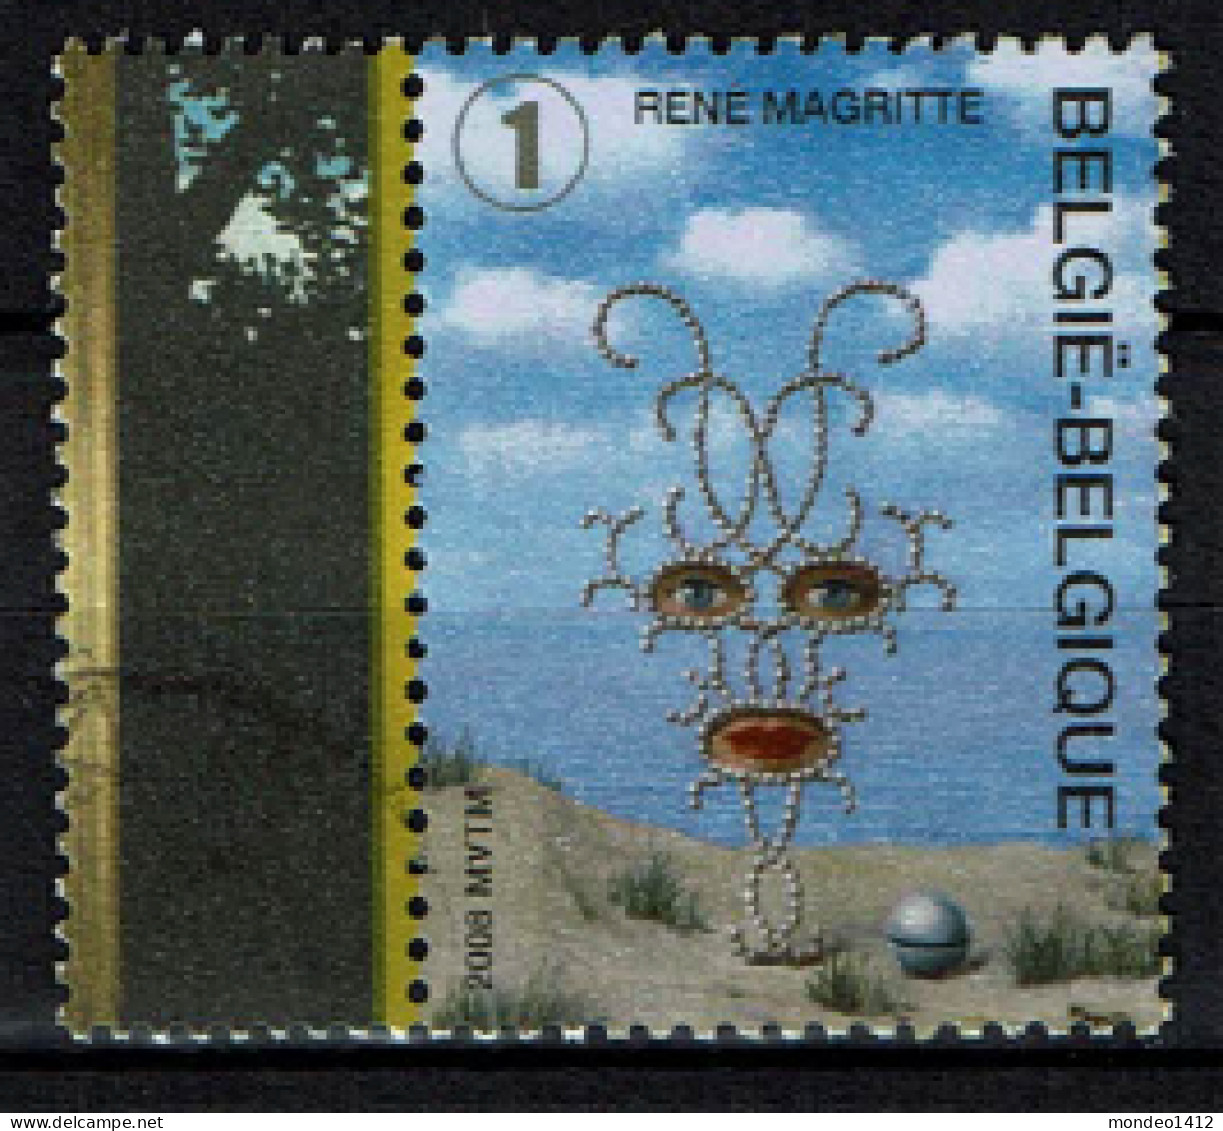 België OBP 3743 - René Magritte - Belgisch Surrealistisch Kunstschilder - Usados